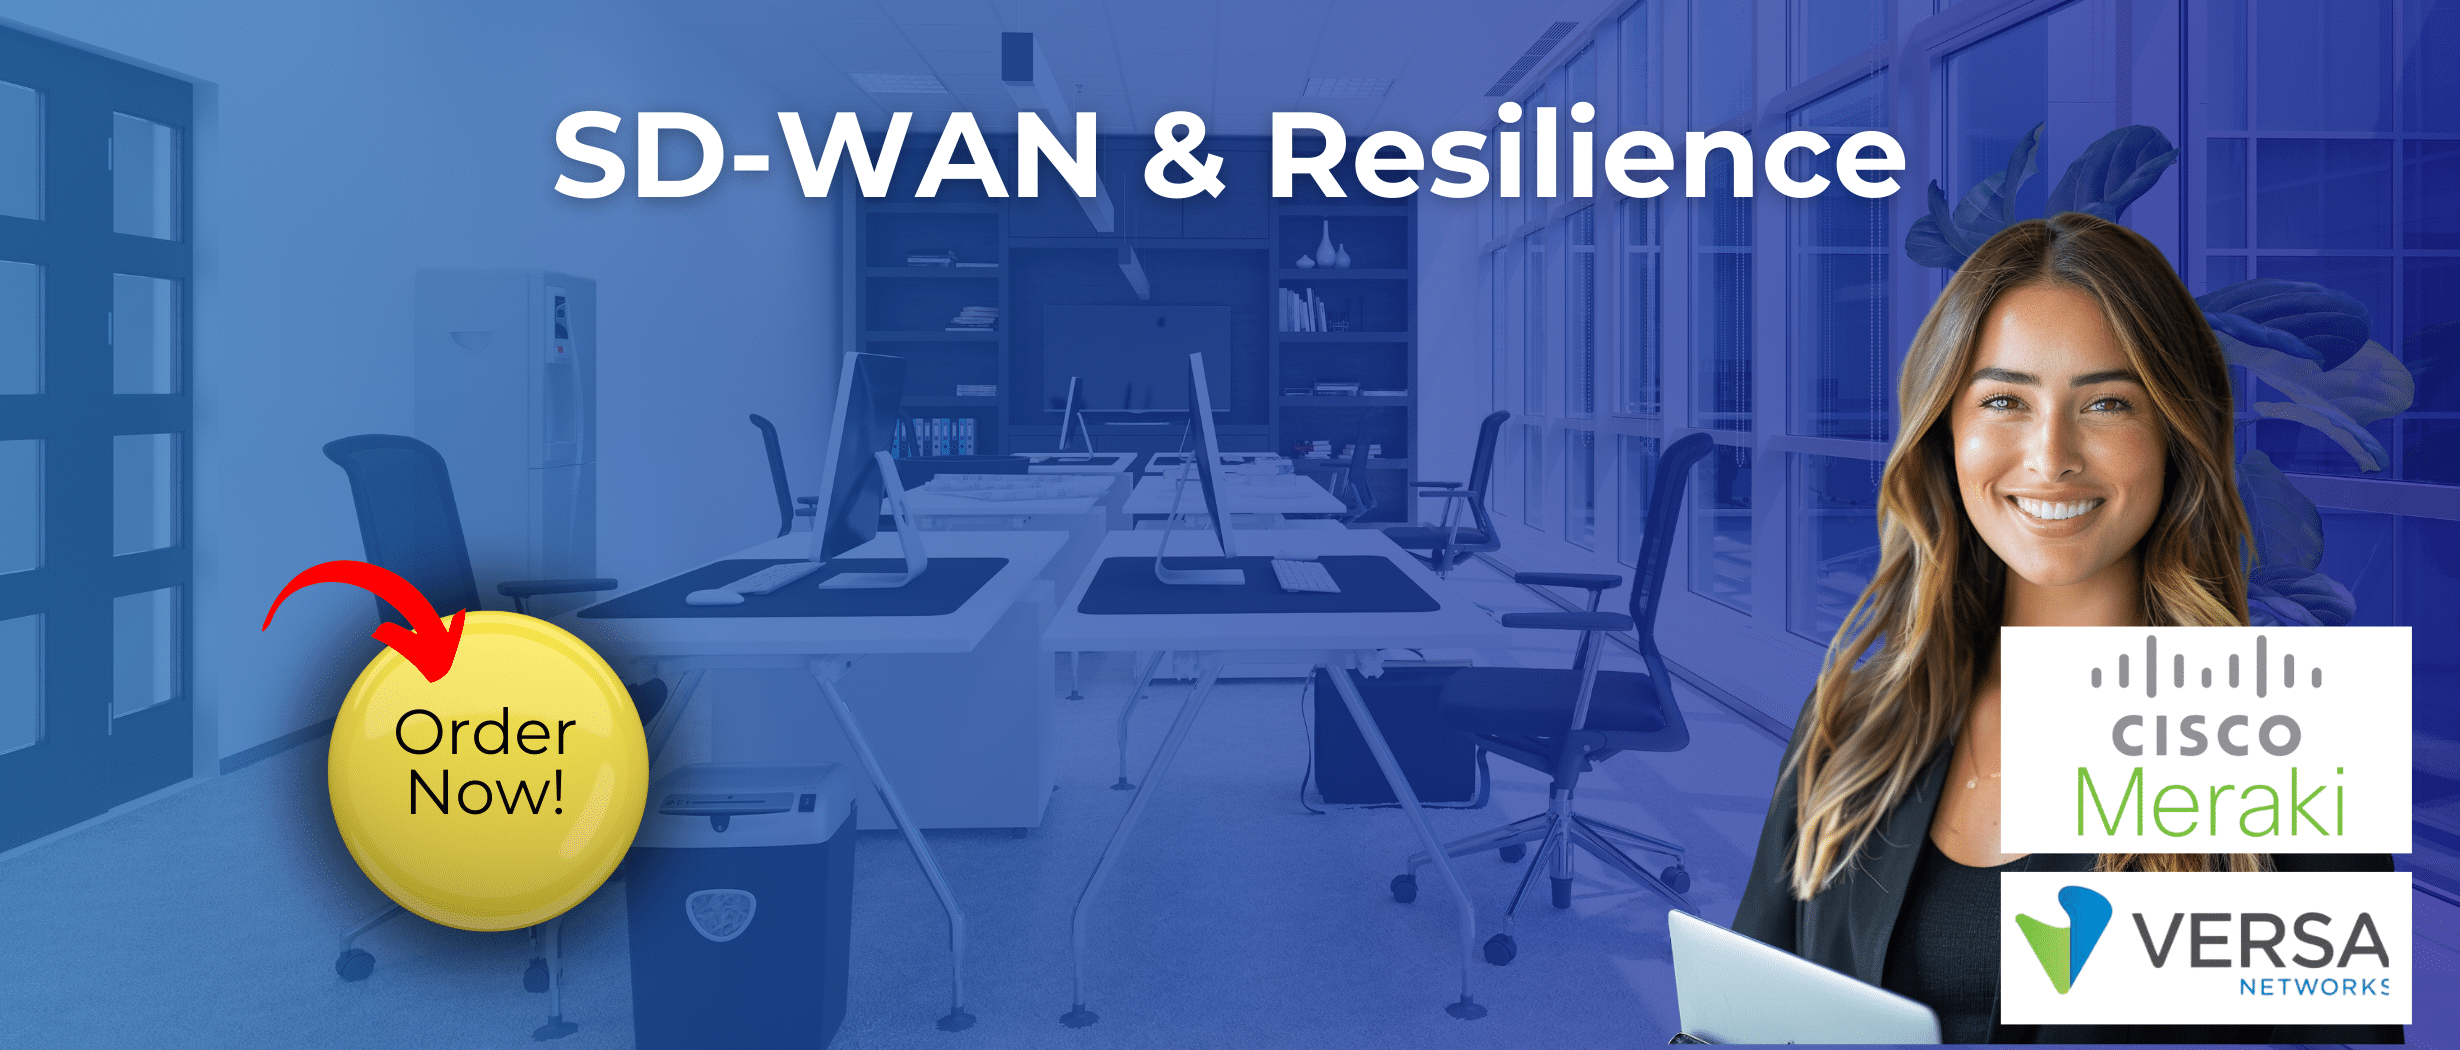 SD-WAN & Resilience